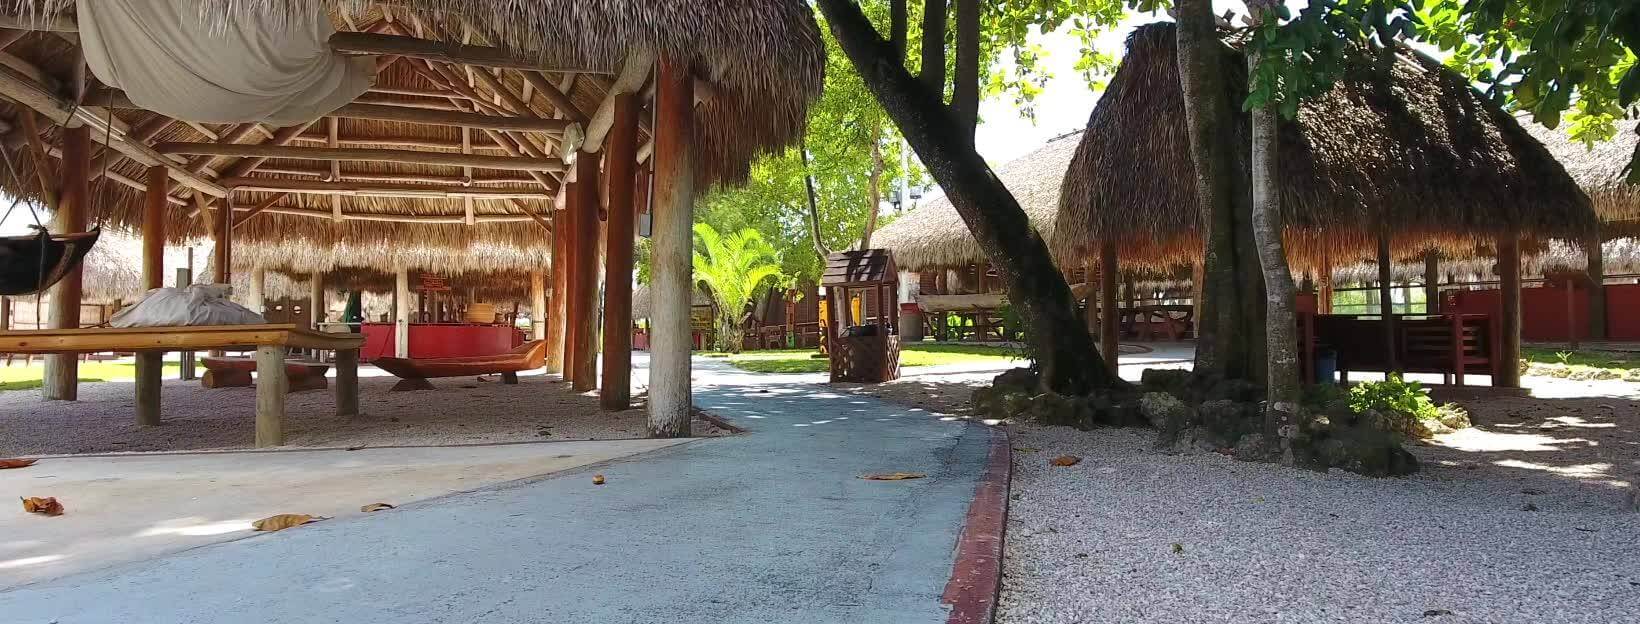 Photo of Miccosukee Indian Village in Miami Florida